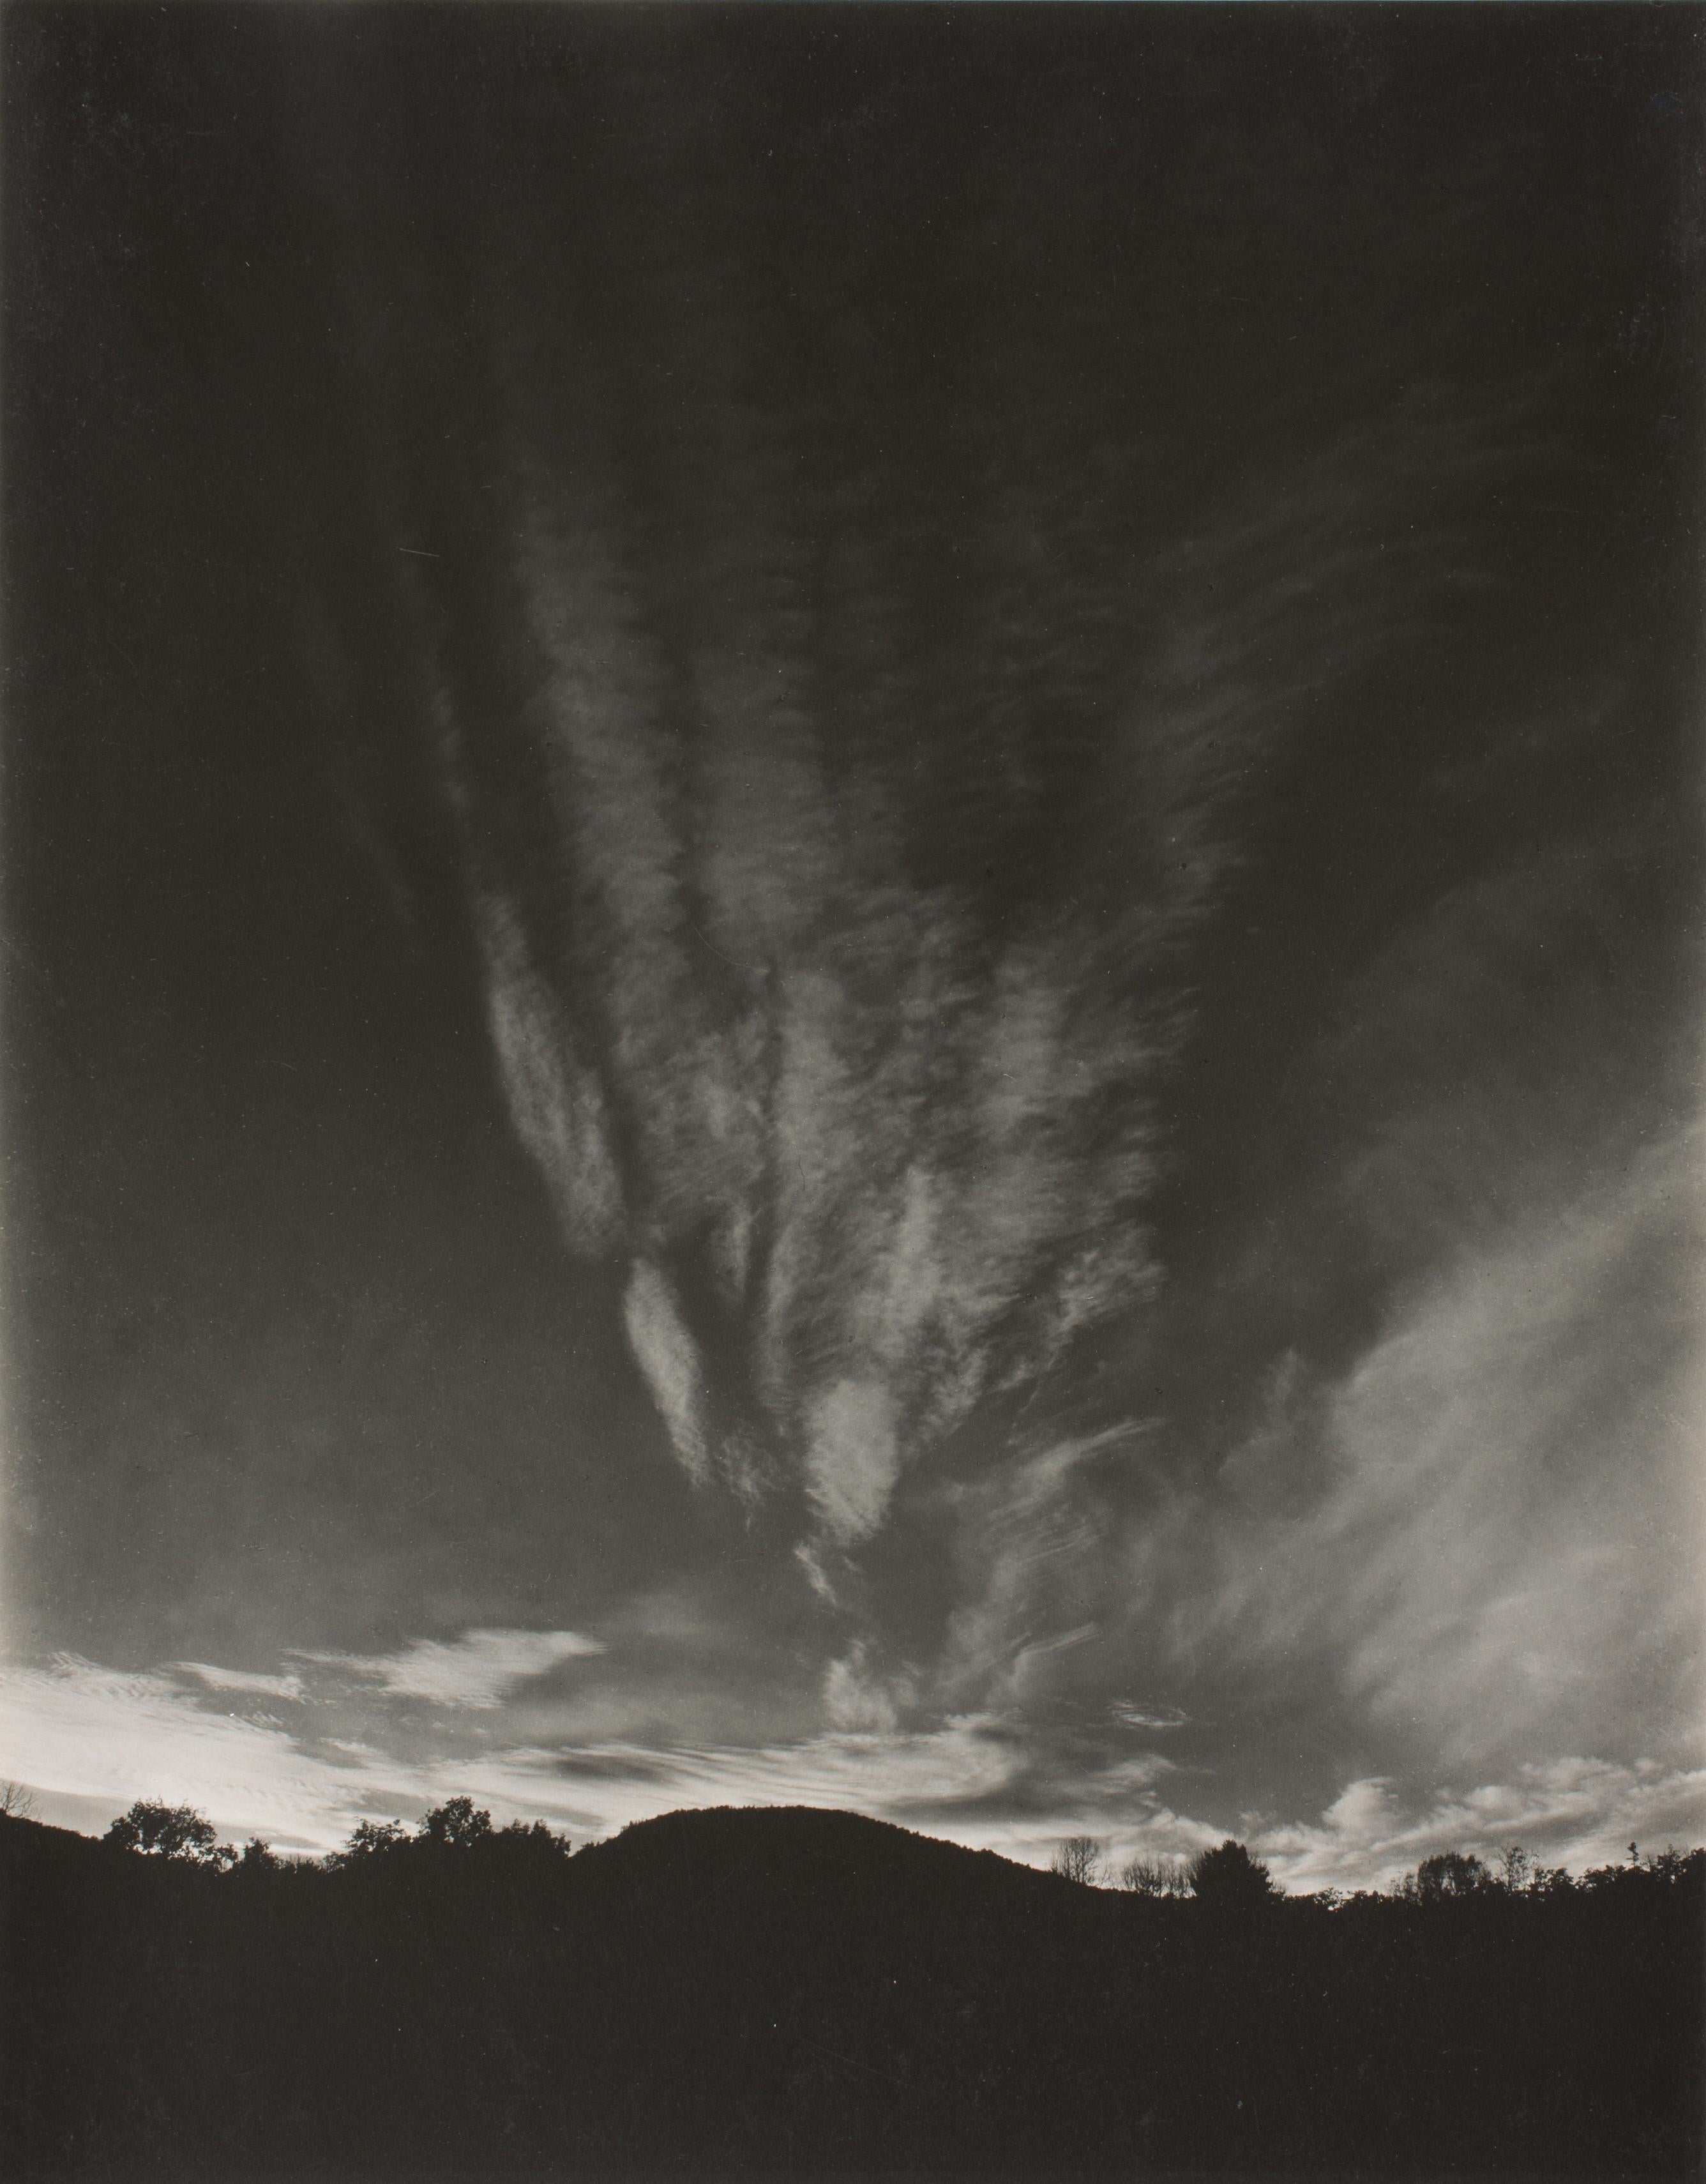 Stieglitz, Mountains and Sky, Alfred Stieglitz Memorial Portfolio (after)